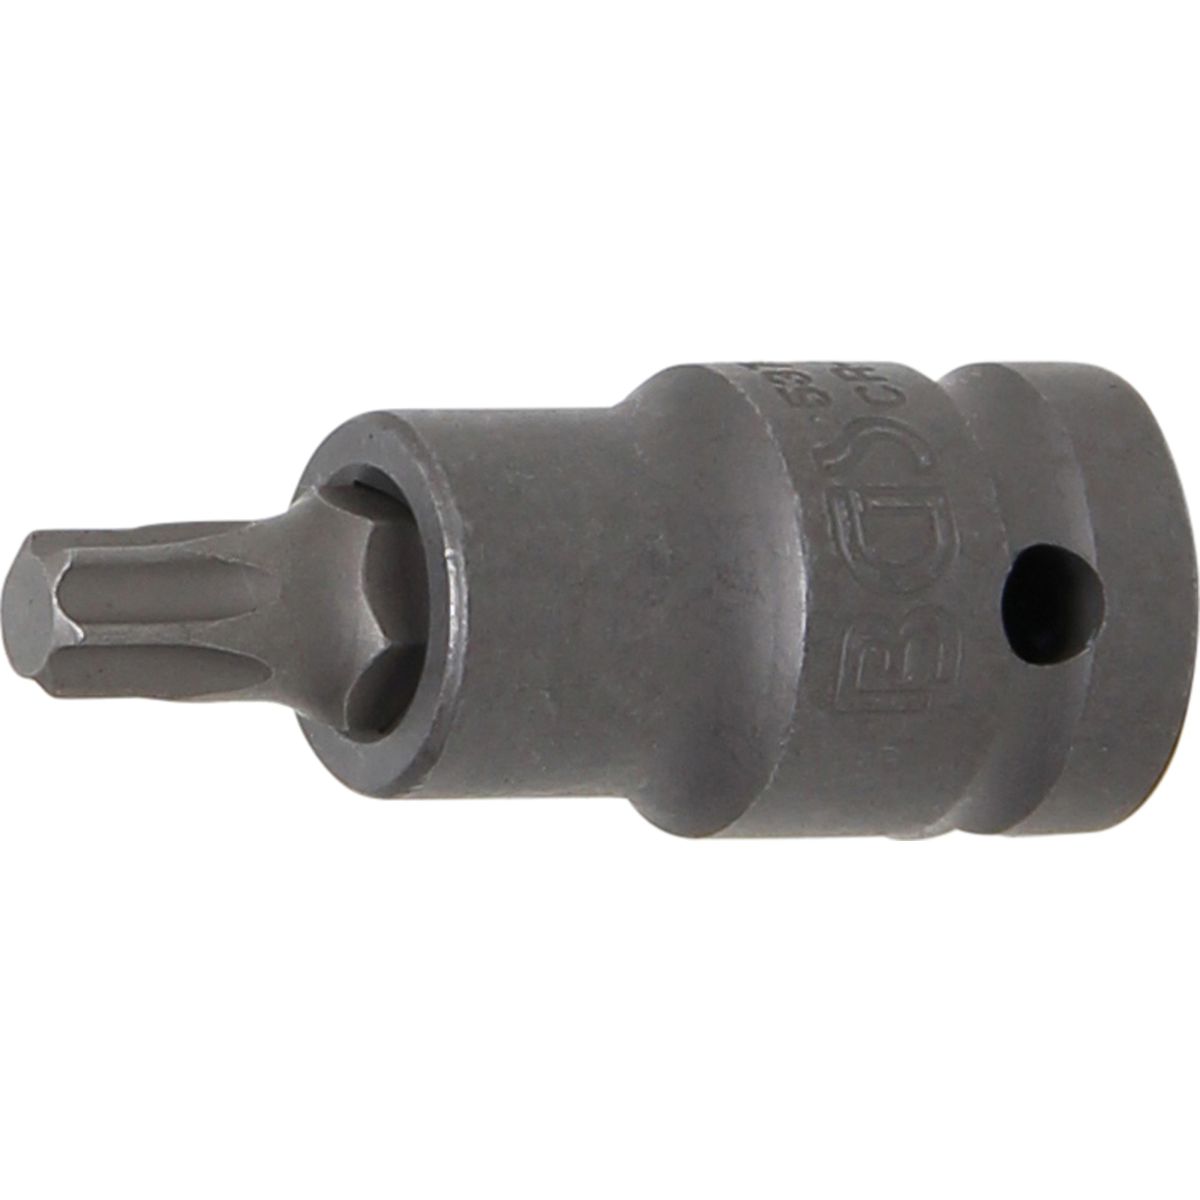 Kraft-Bit-Einsatz | Länge 55 mm | Antrieb Innenvierkant 12,5 mm (1/2") | T-Profil (für Torx) T47